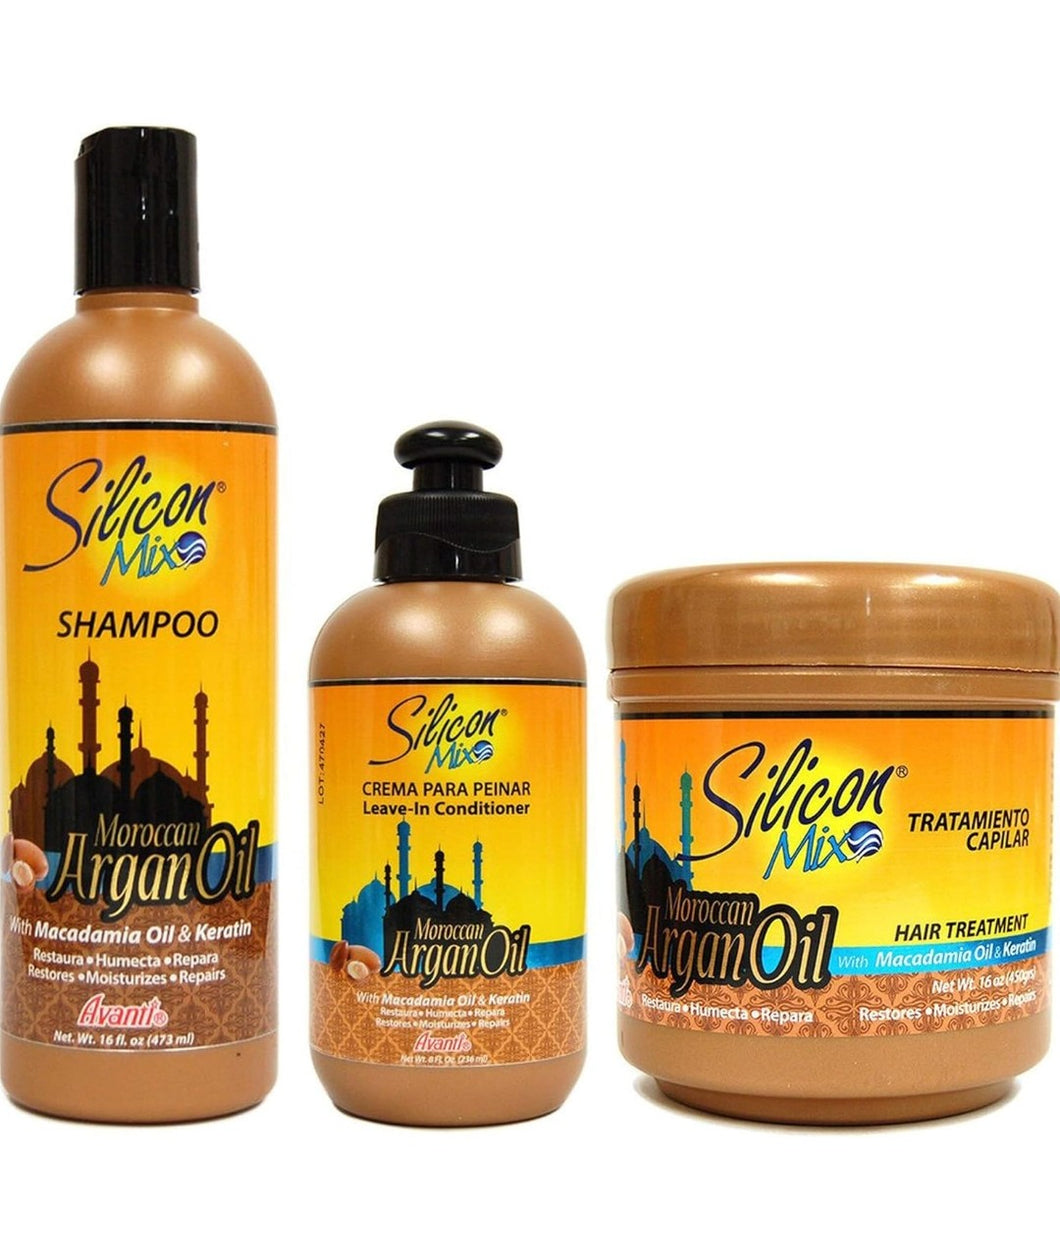 Silicon Mix Moroccan Argan Oil shampoo